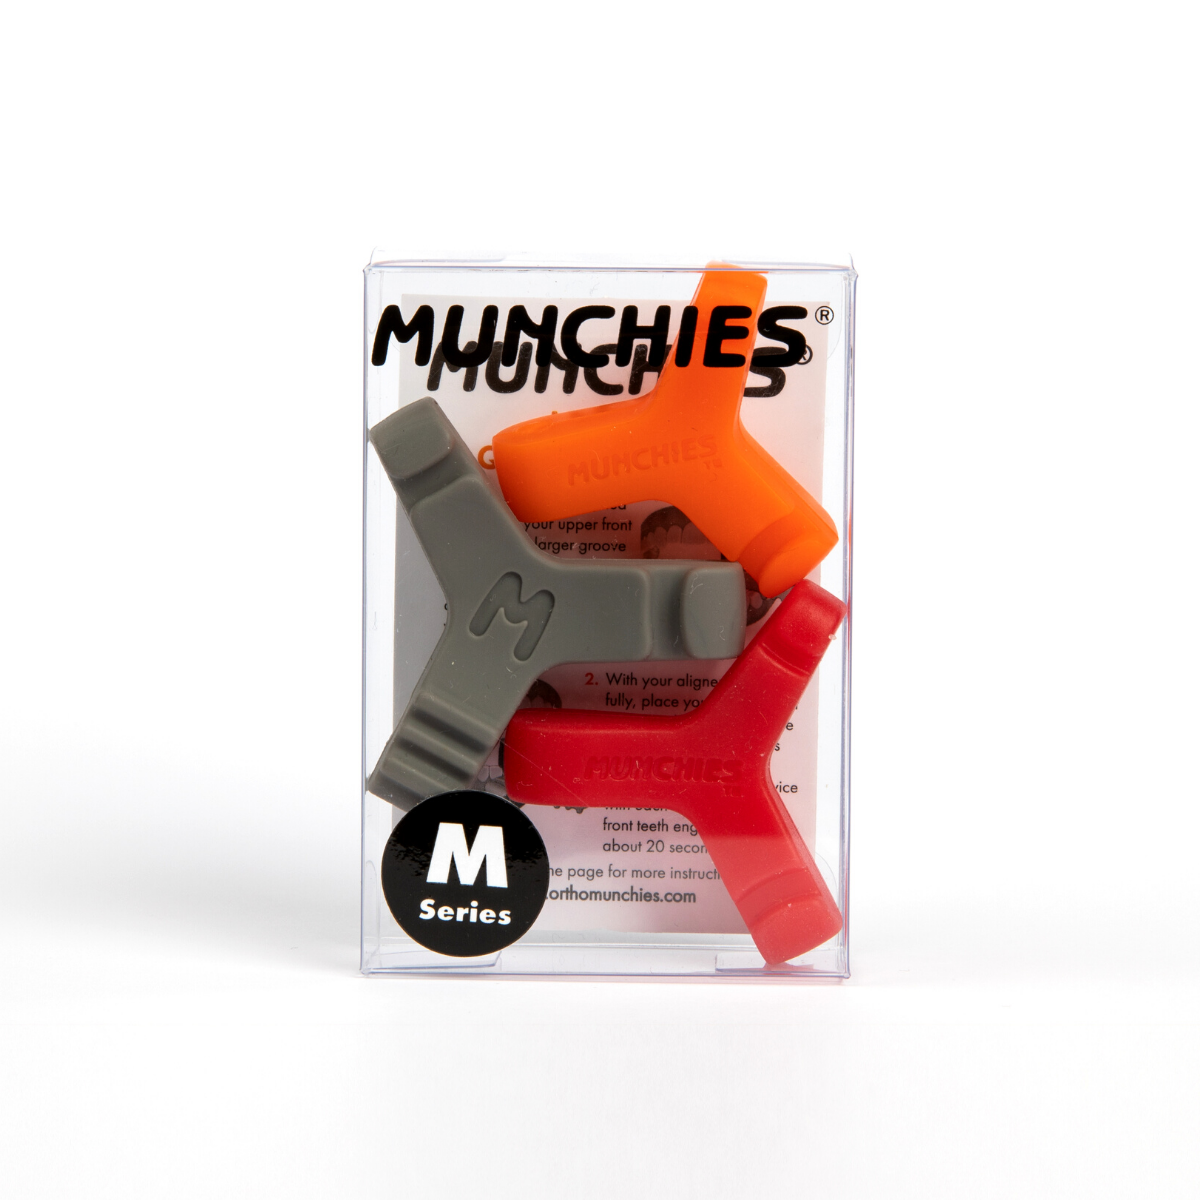 Munchies® M-Series and Original 3 piece pack